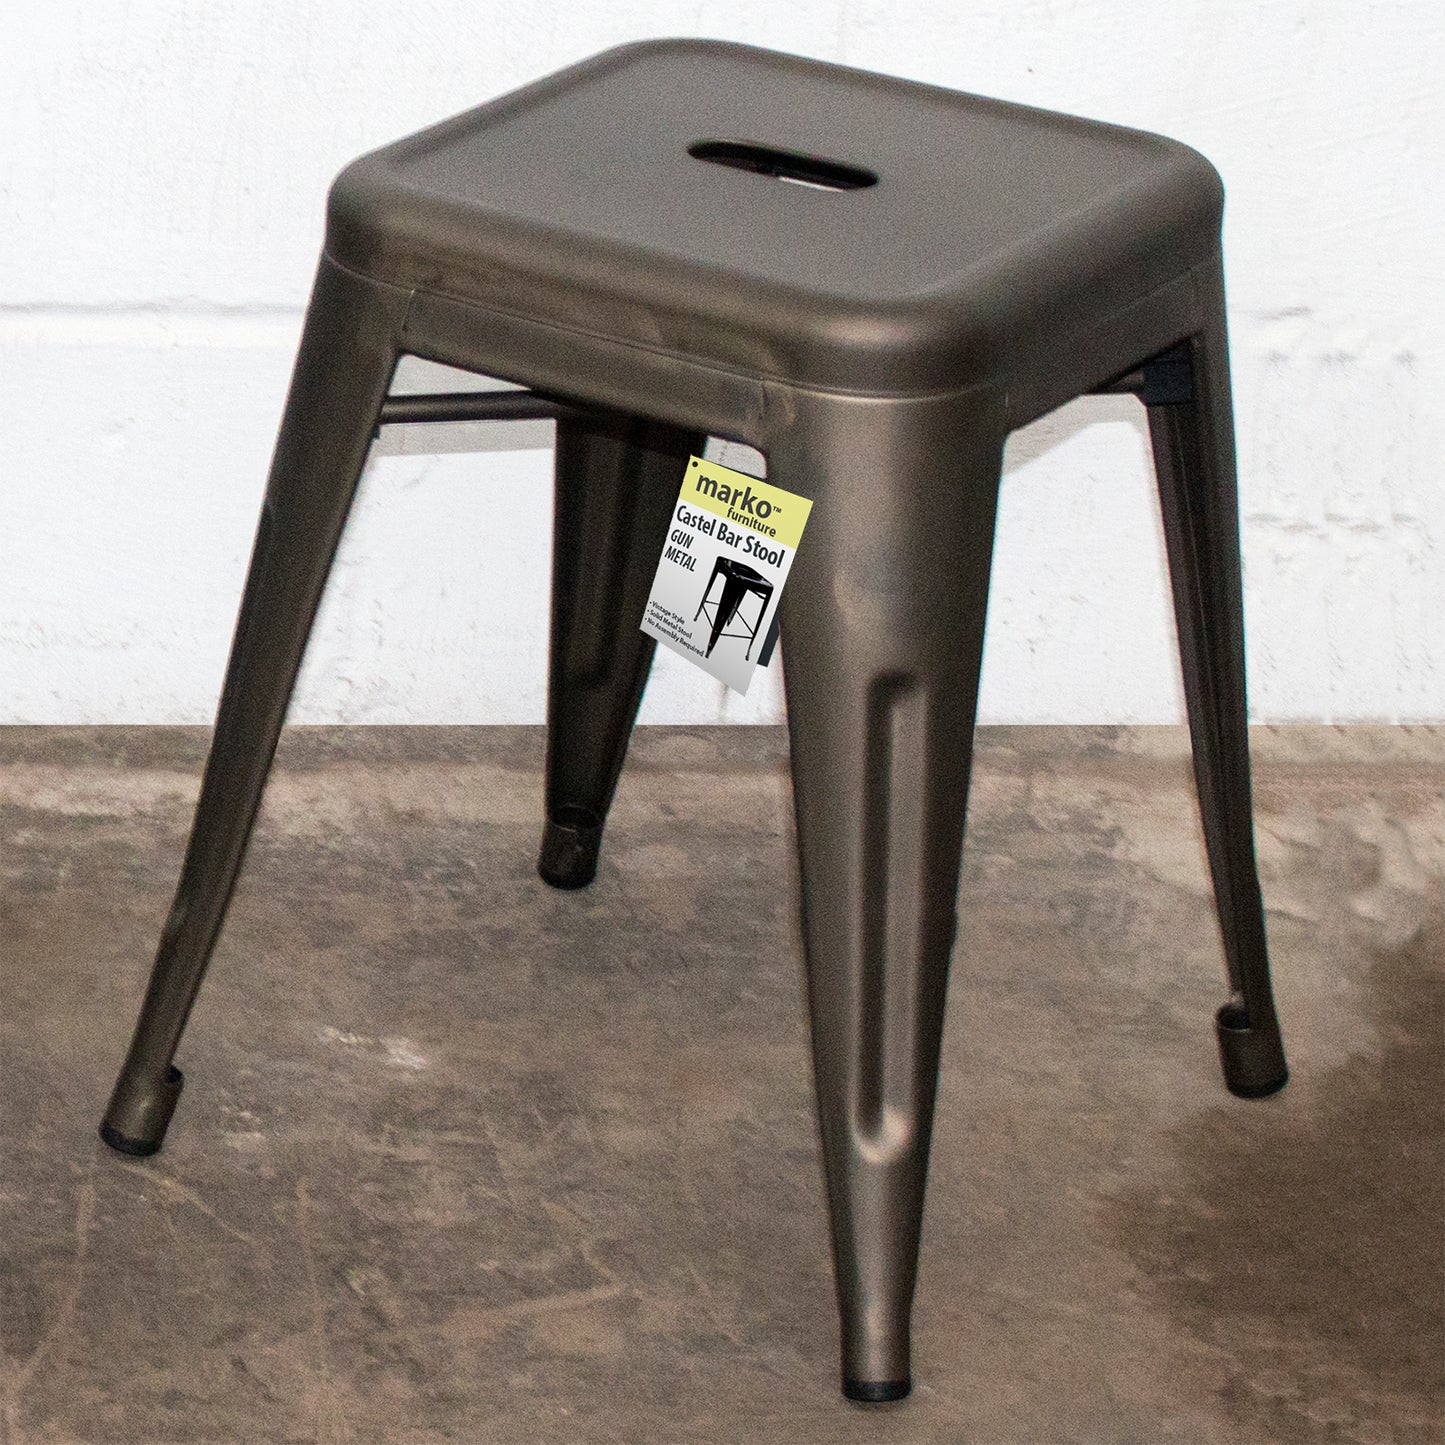 5PC Enna Table Siena Chair & Castel Stool Set - Gun Metal Grey